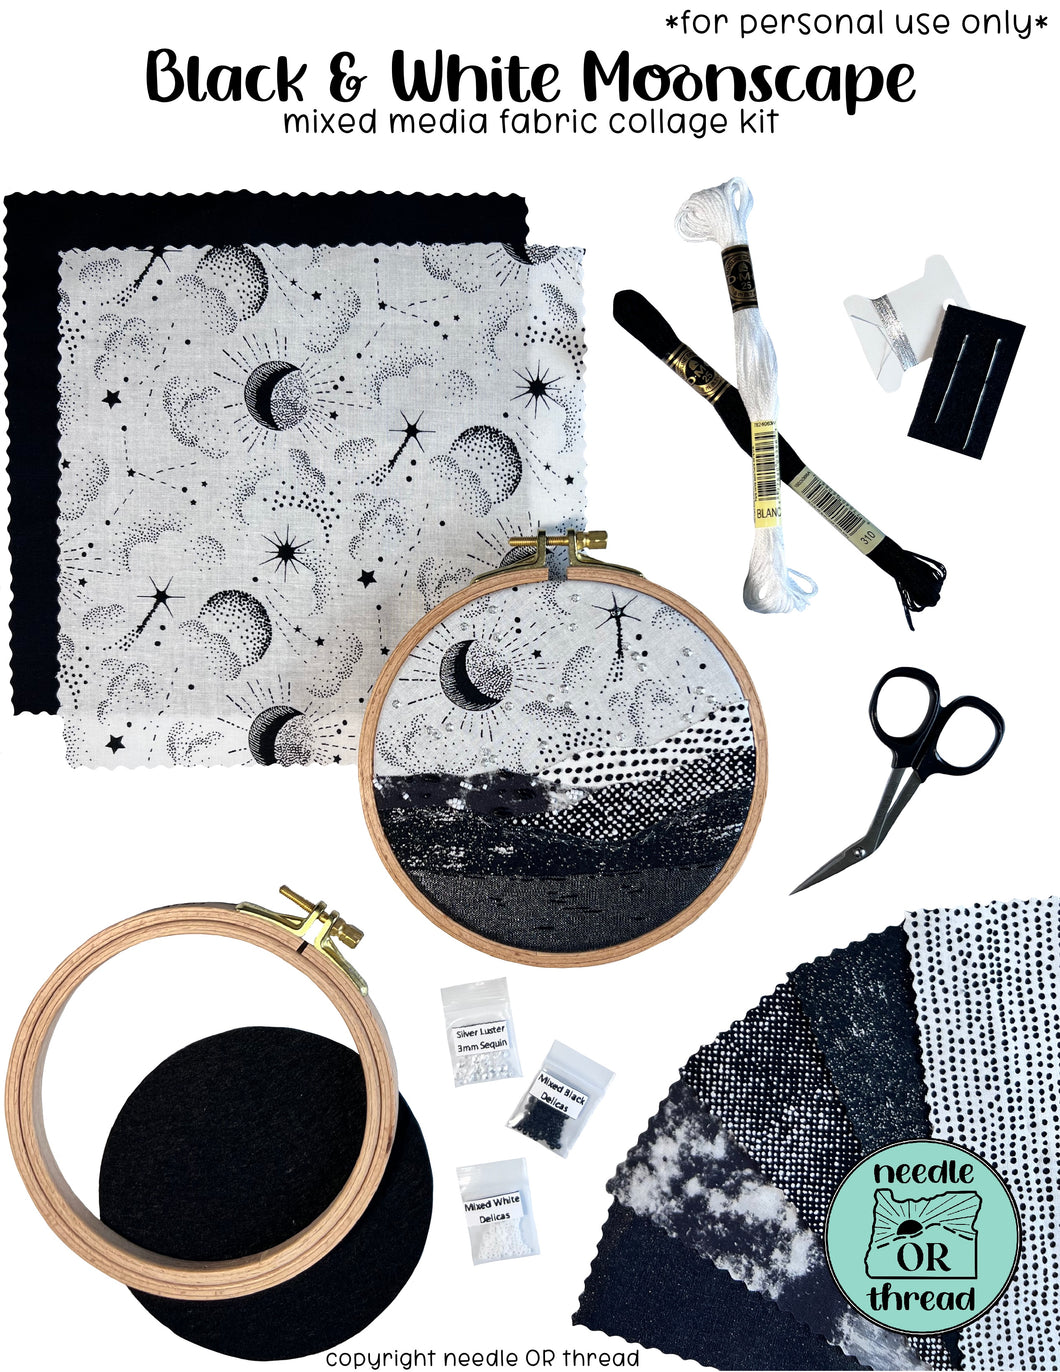 Black & White Moonscape Fabric Collage Kit